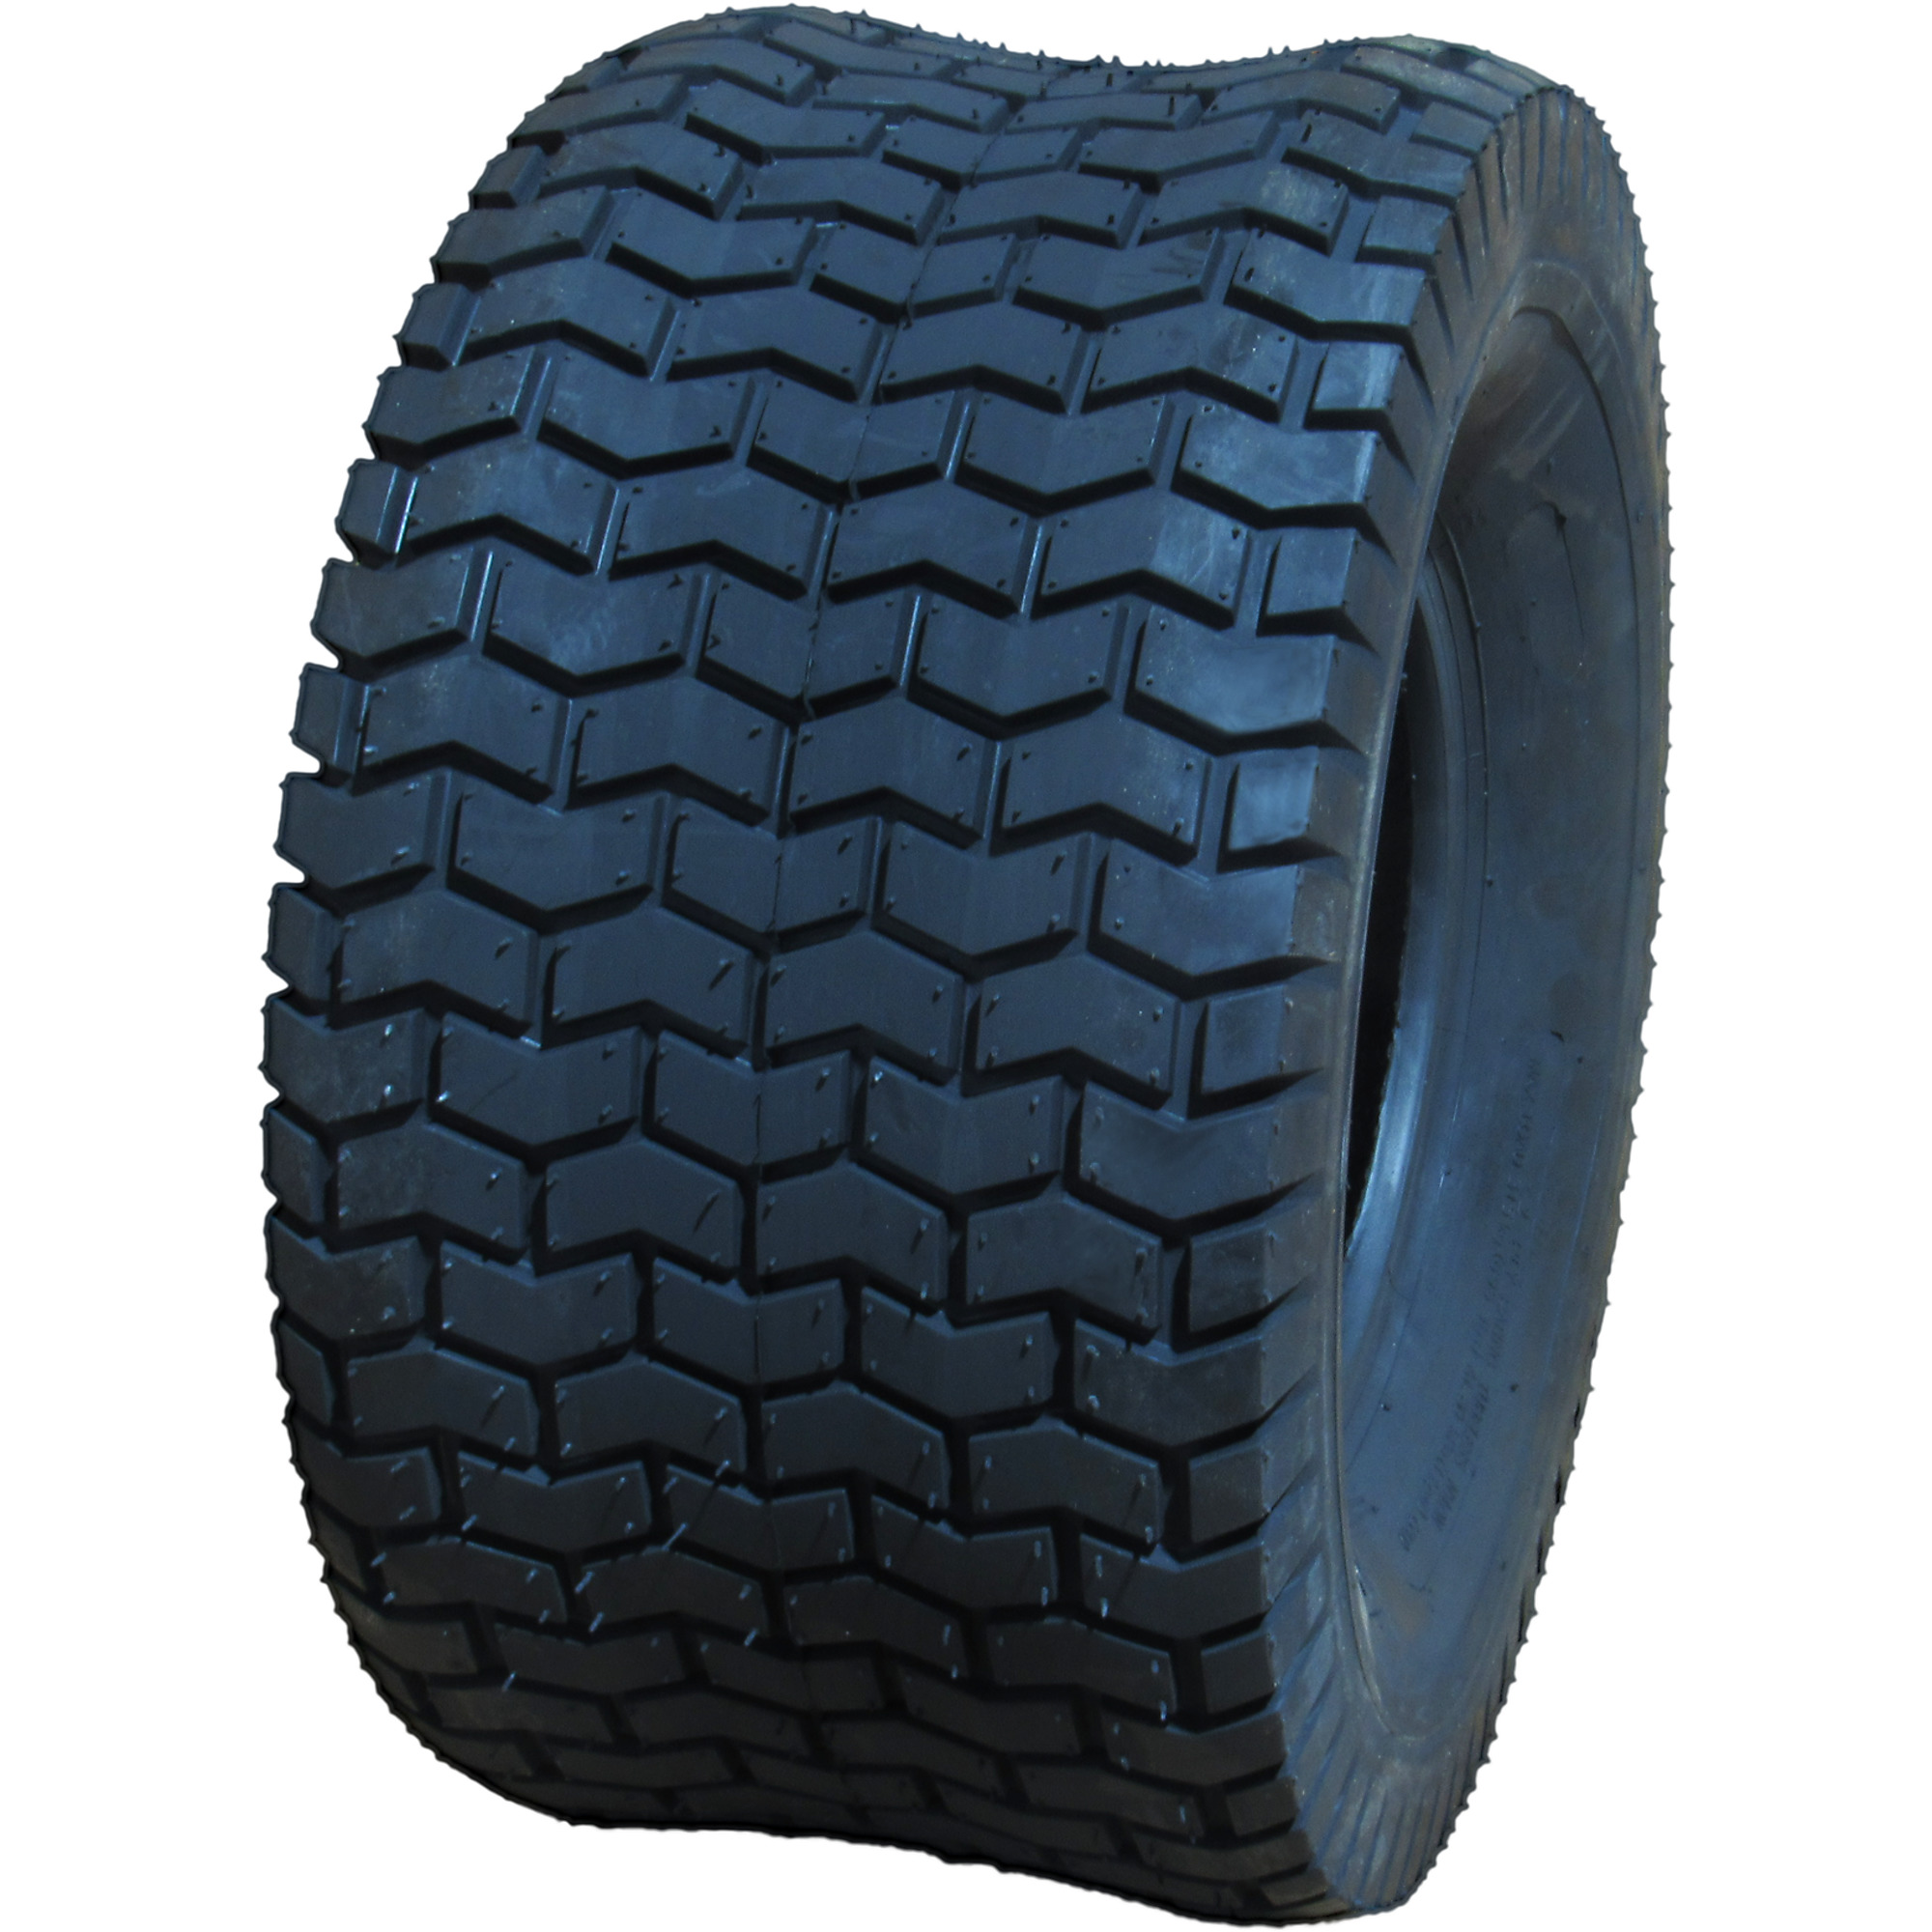 HI-RUN, Lawn Garden Tire, SU12 Turf II, Tire Size 18X9.50-8 Load Range Rating A, Model WD1097